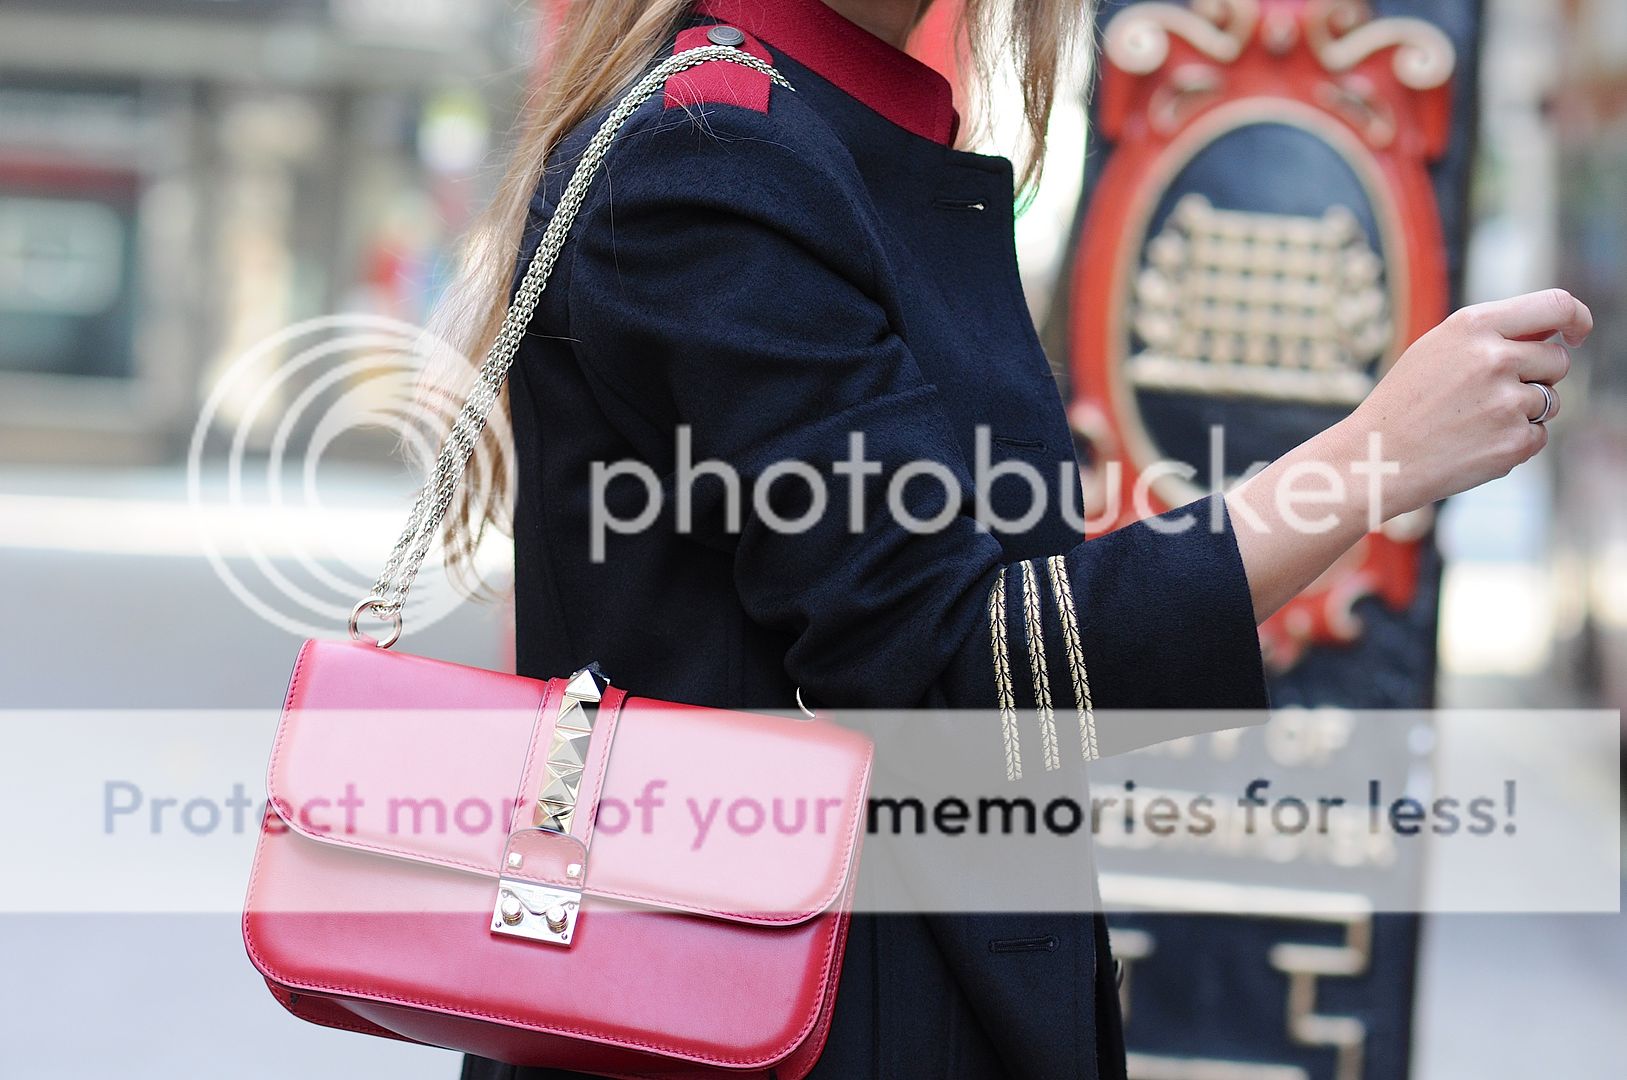  photo how to wear military coat london street style .jpg